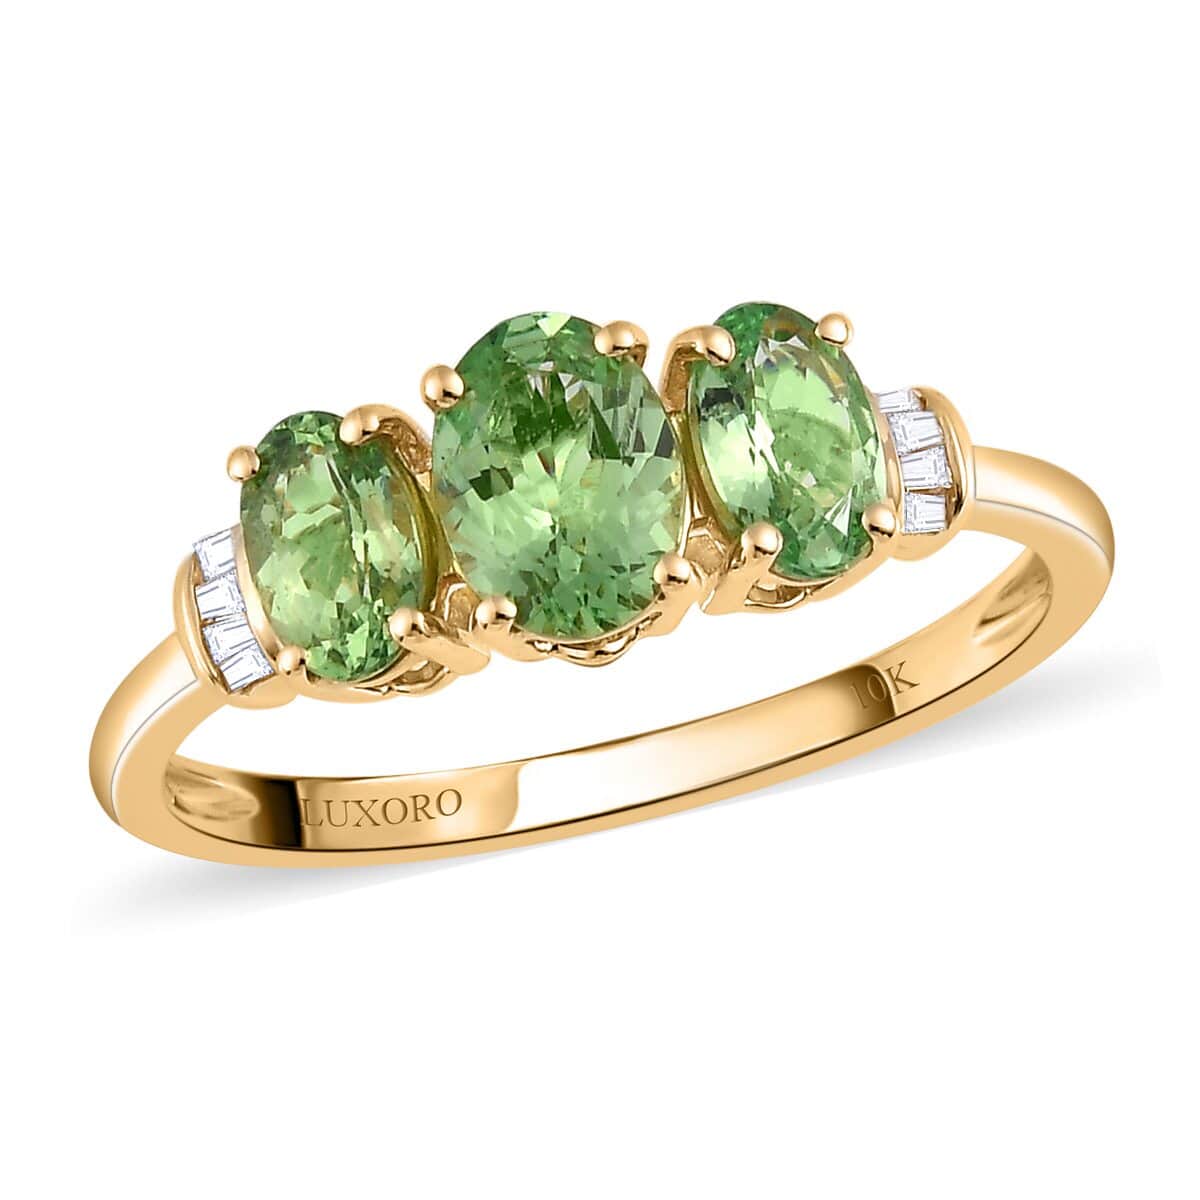 Luxoro 10K Yellow Gold Premium Tsavorite Garnet and G-H I3 Diamond Trilogy Ring (Size 7.0) 1.75 ctw image number 0